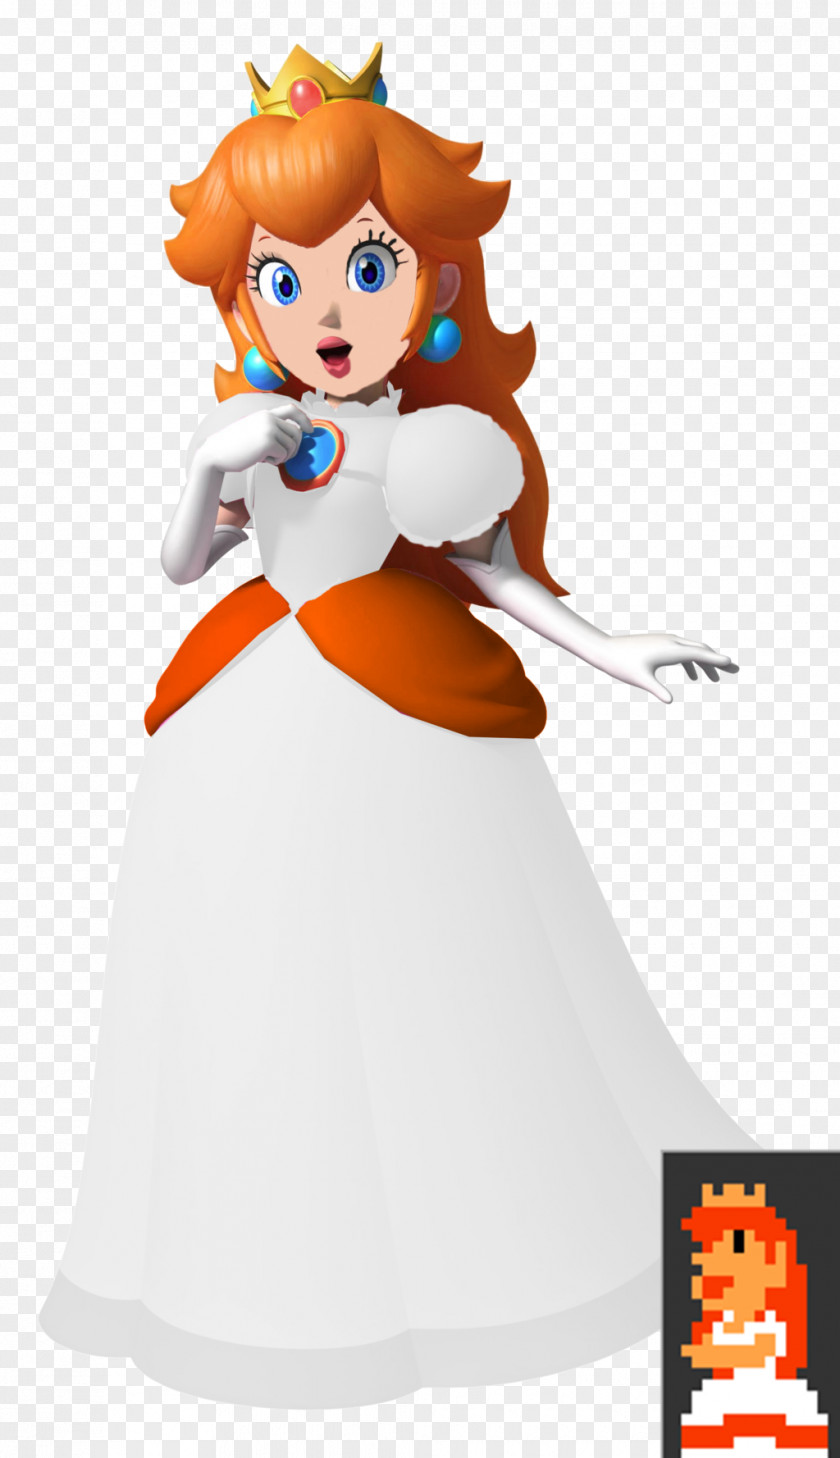 Peach Super Mario Bros. Princess Sprite 3D Computer Graphics PNG